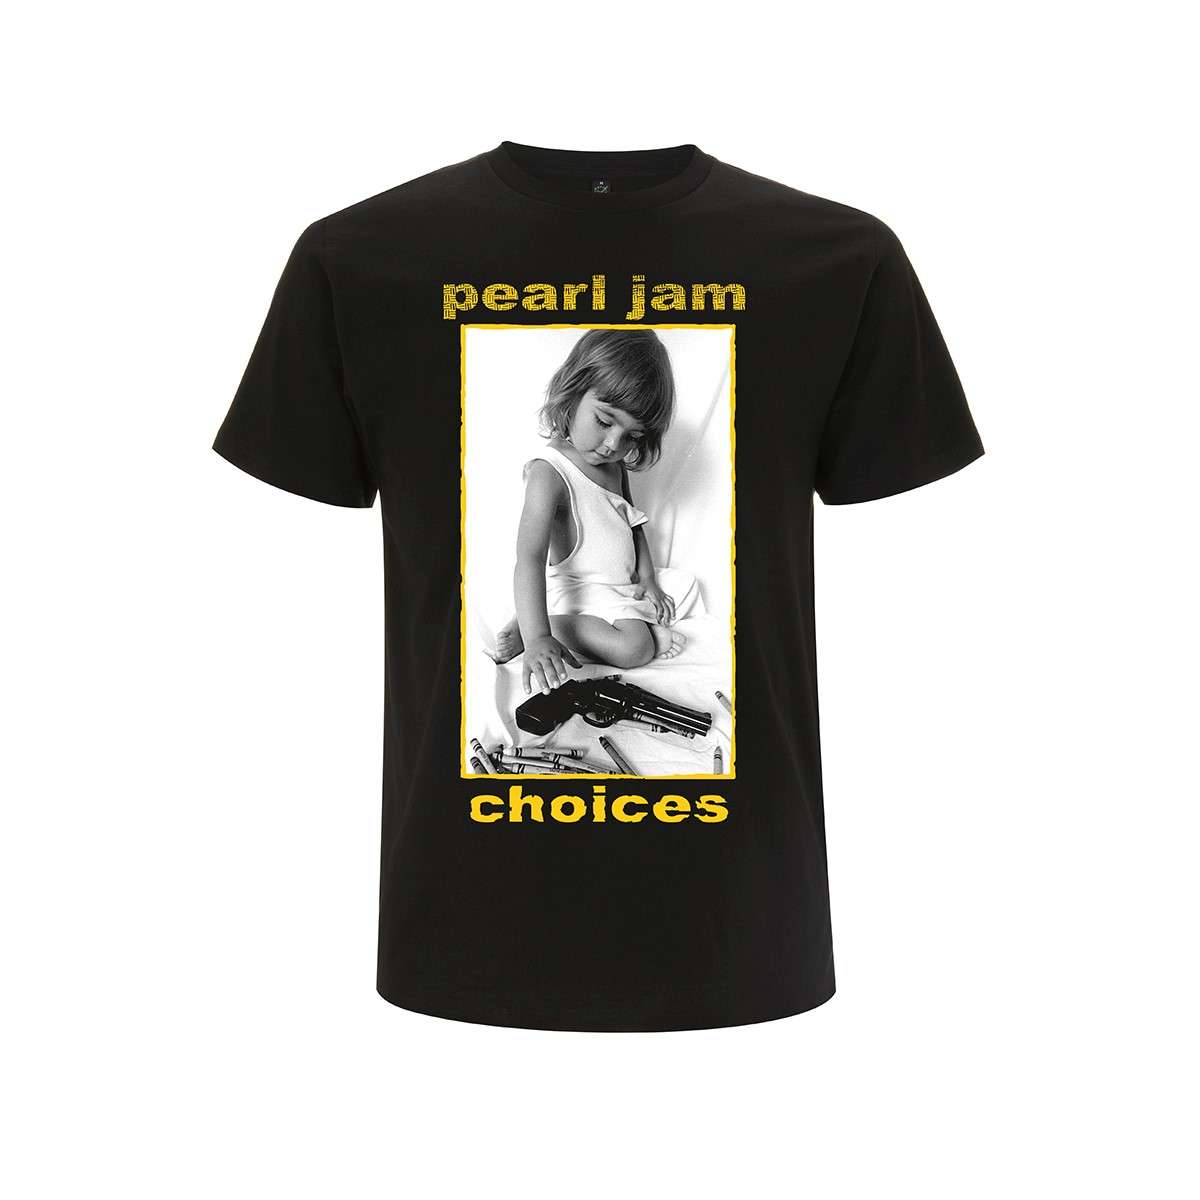 Choices - Black Tee - Pearl Jam